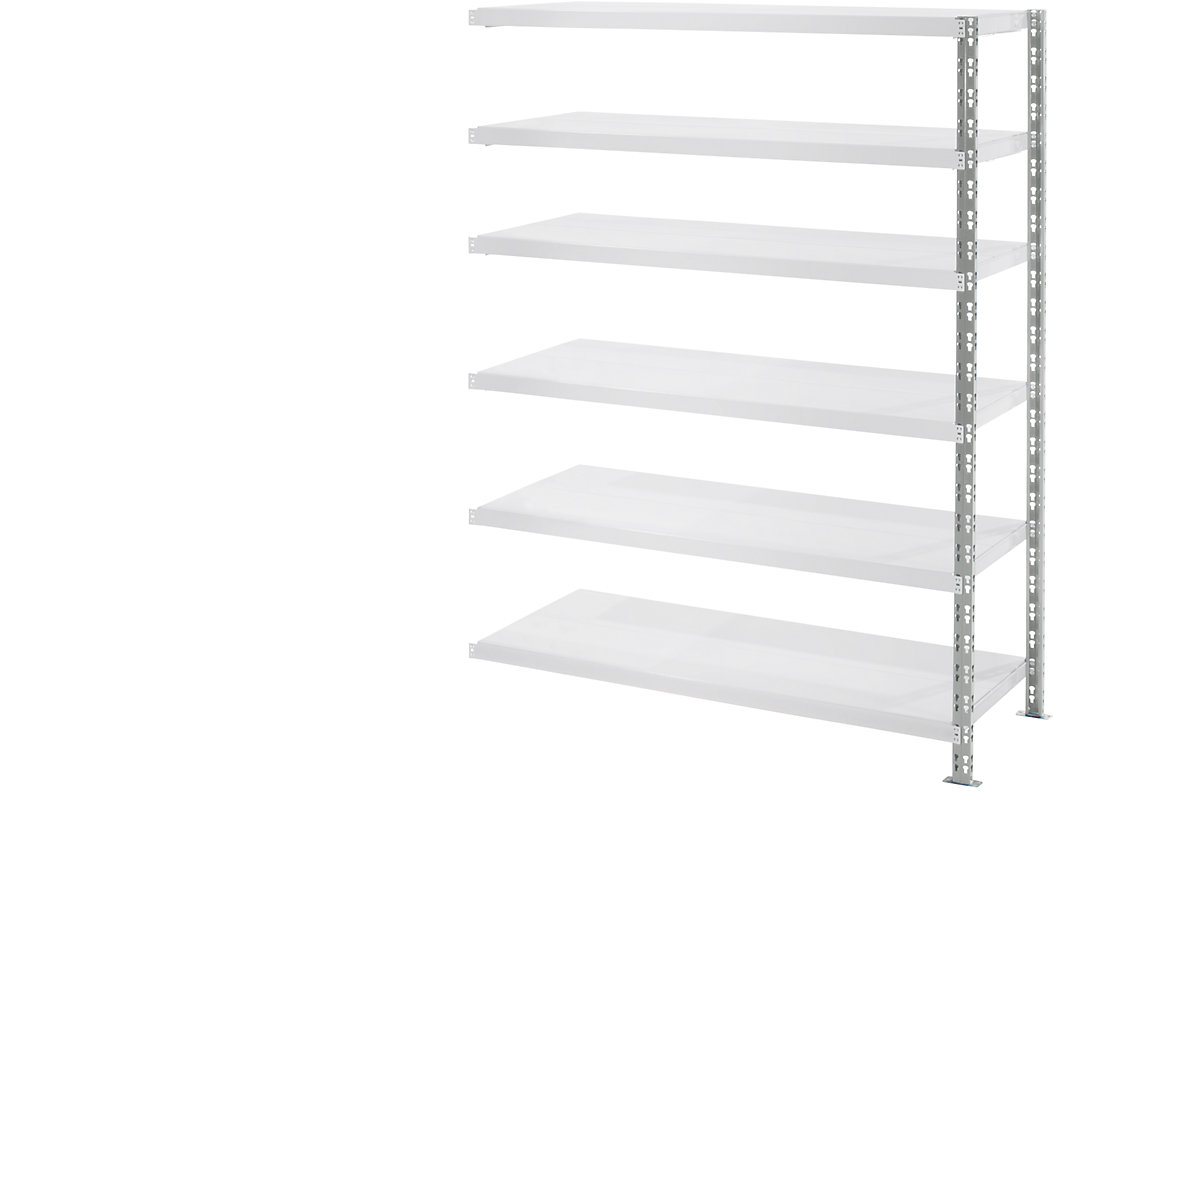 Wide span shelf unit with sheet steel shelves, depth 600 mm, extension shelf unit, HxW 1976 x 1525 mm